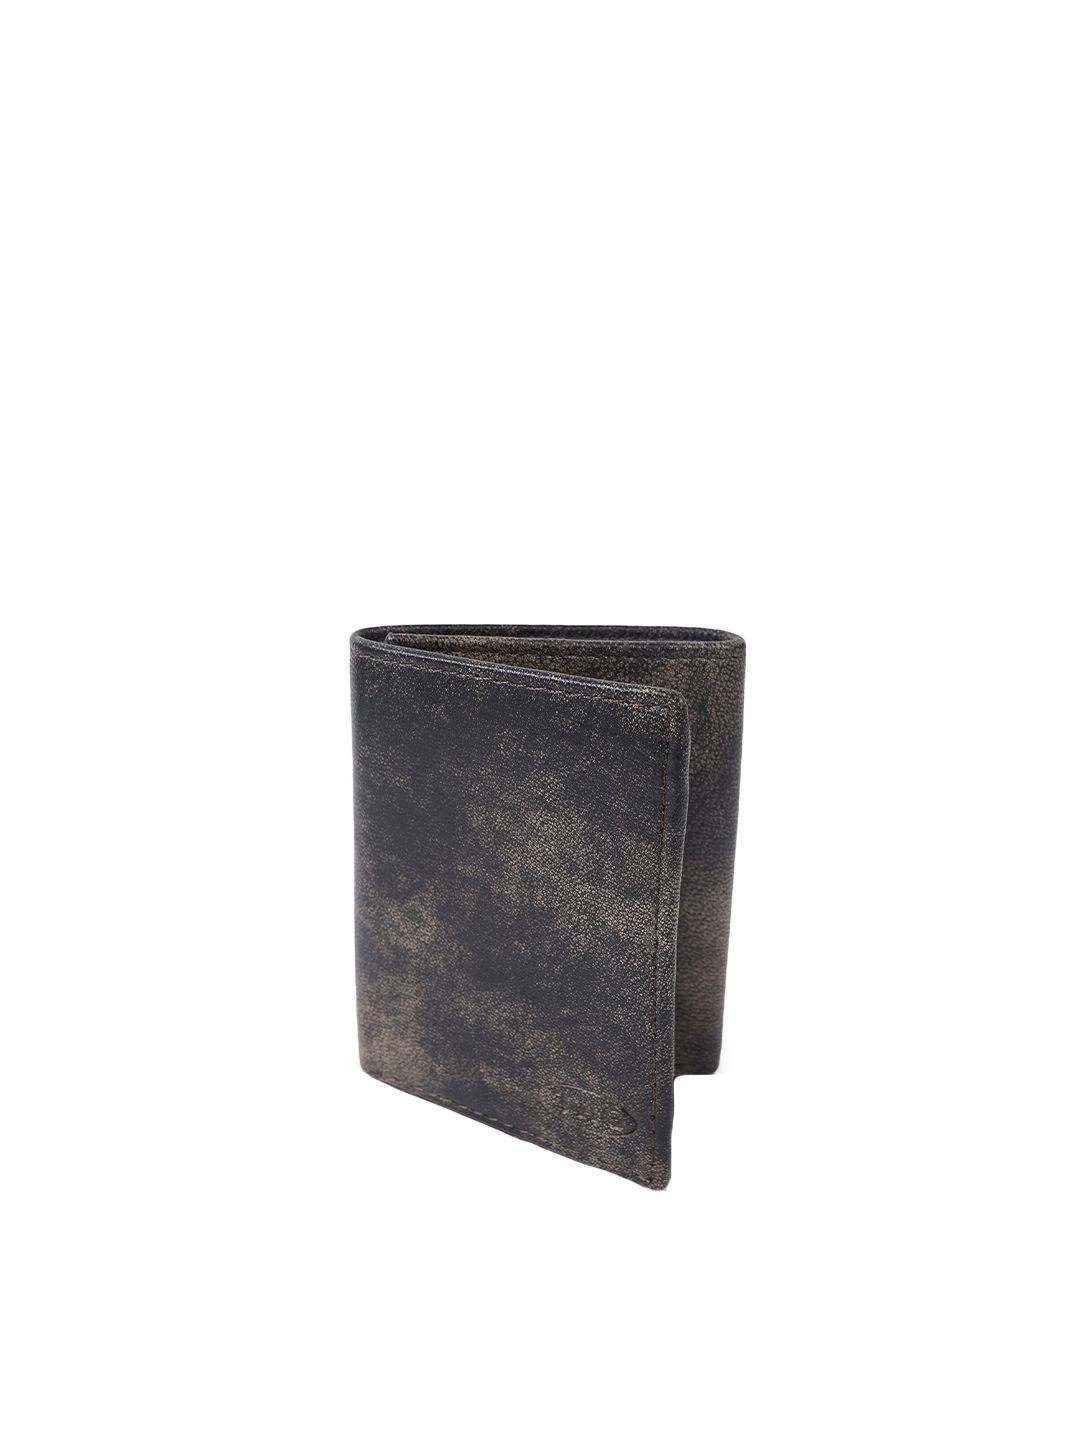 cimoni unisex black & grey textured leather two fold wallet